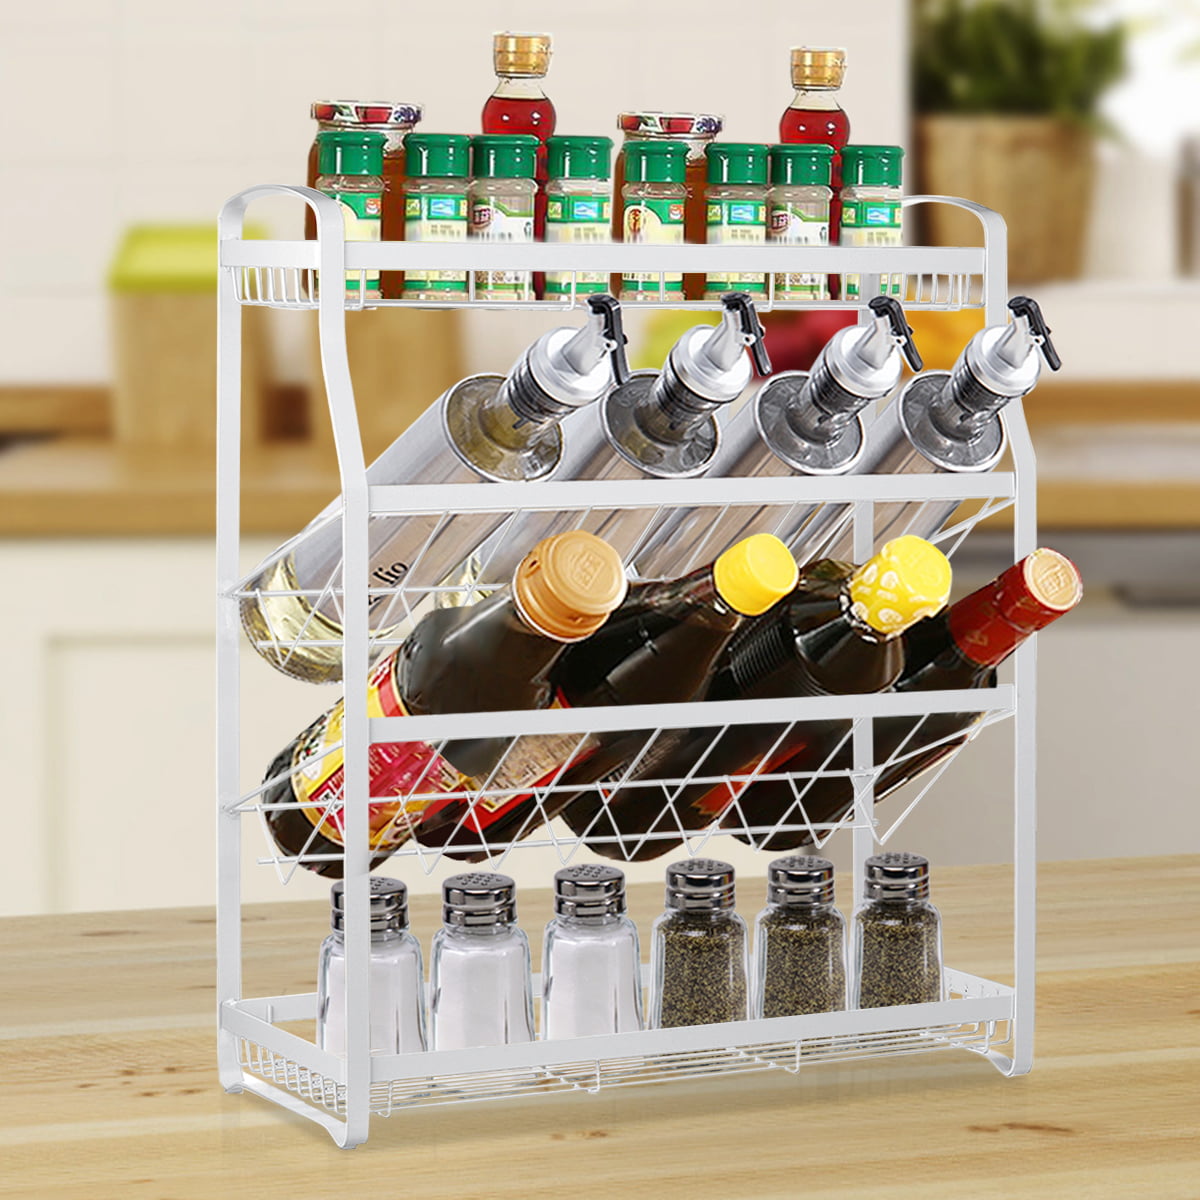 Details about   Multifunction Kitchen Organizer Sauce Bottle Rack 4 In 1 Holder Can Storage Rack 